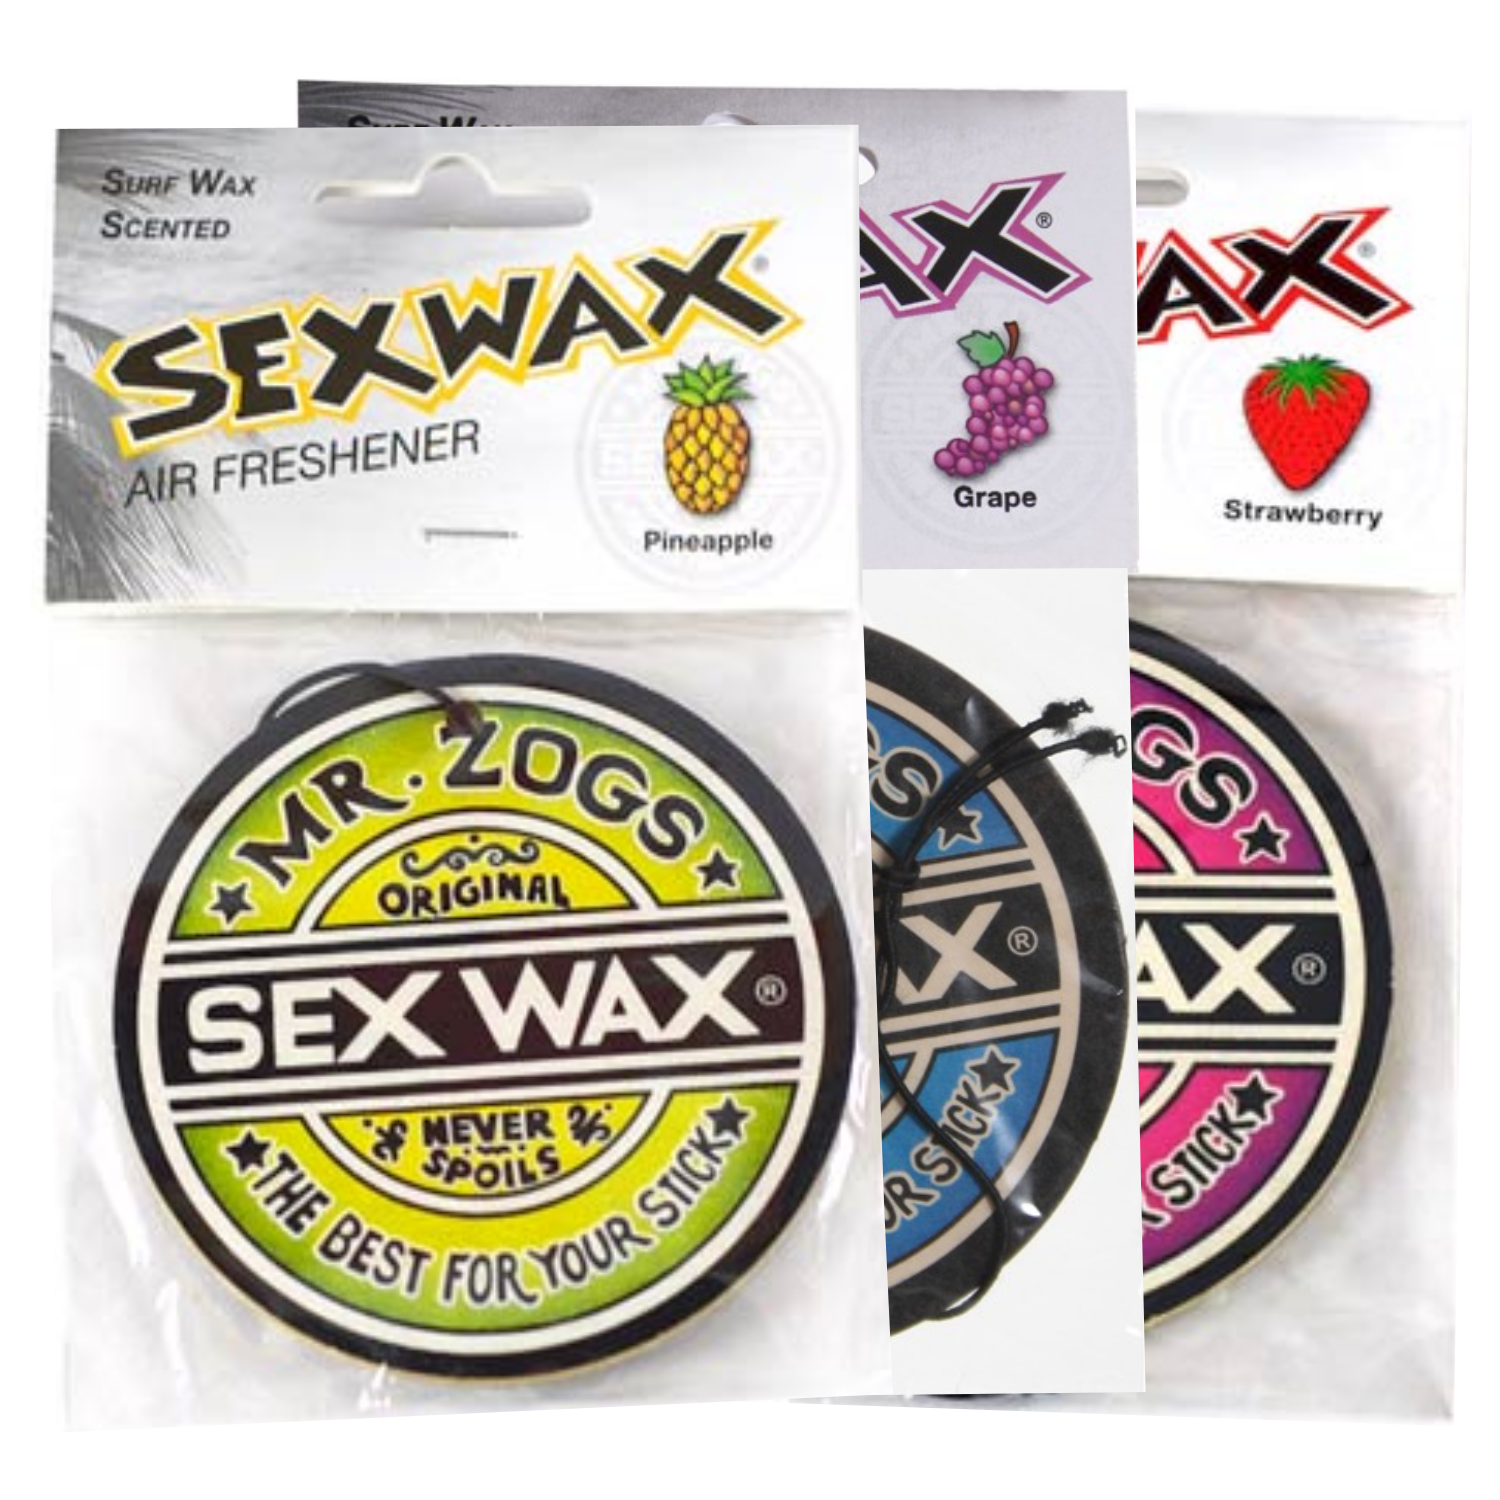 Mr. Zogs Sex Wax Original Surf Wax Car Air Freshener 